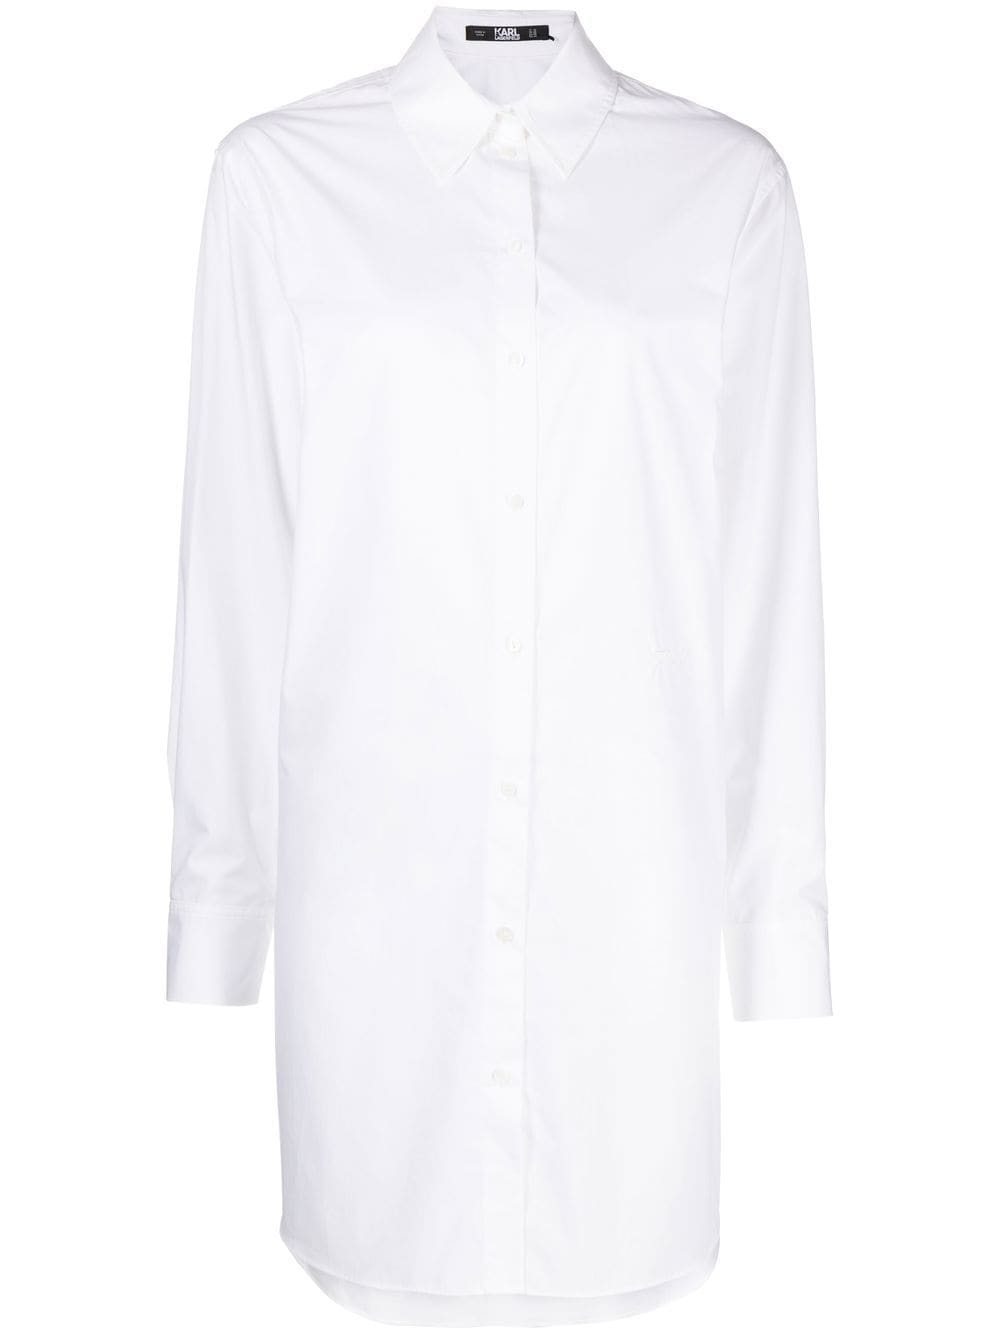 Karl Lagerfeld logo-embellished cotton shirt - White